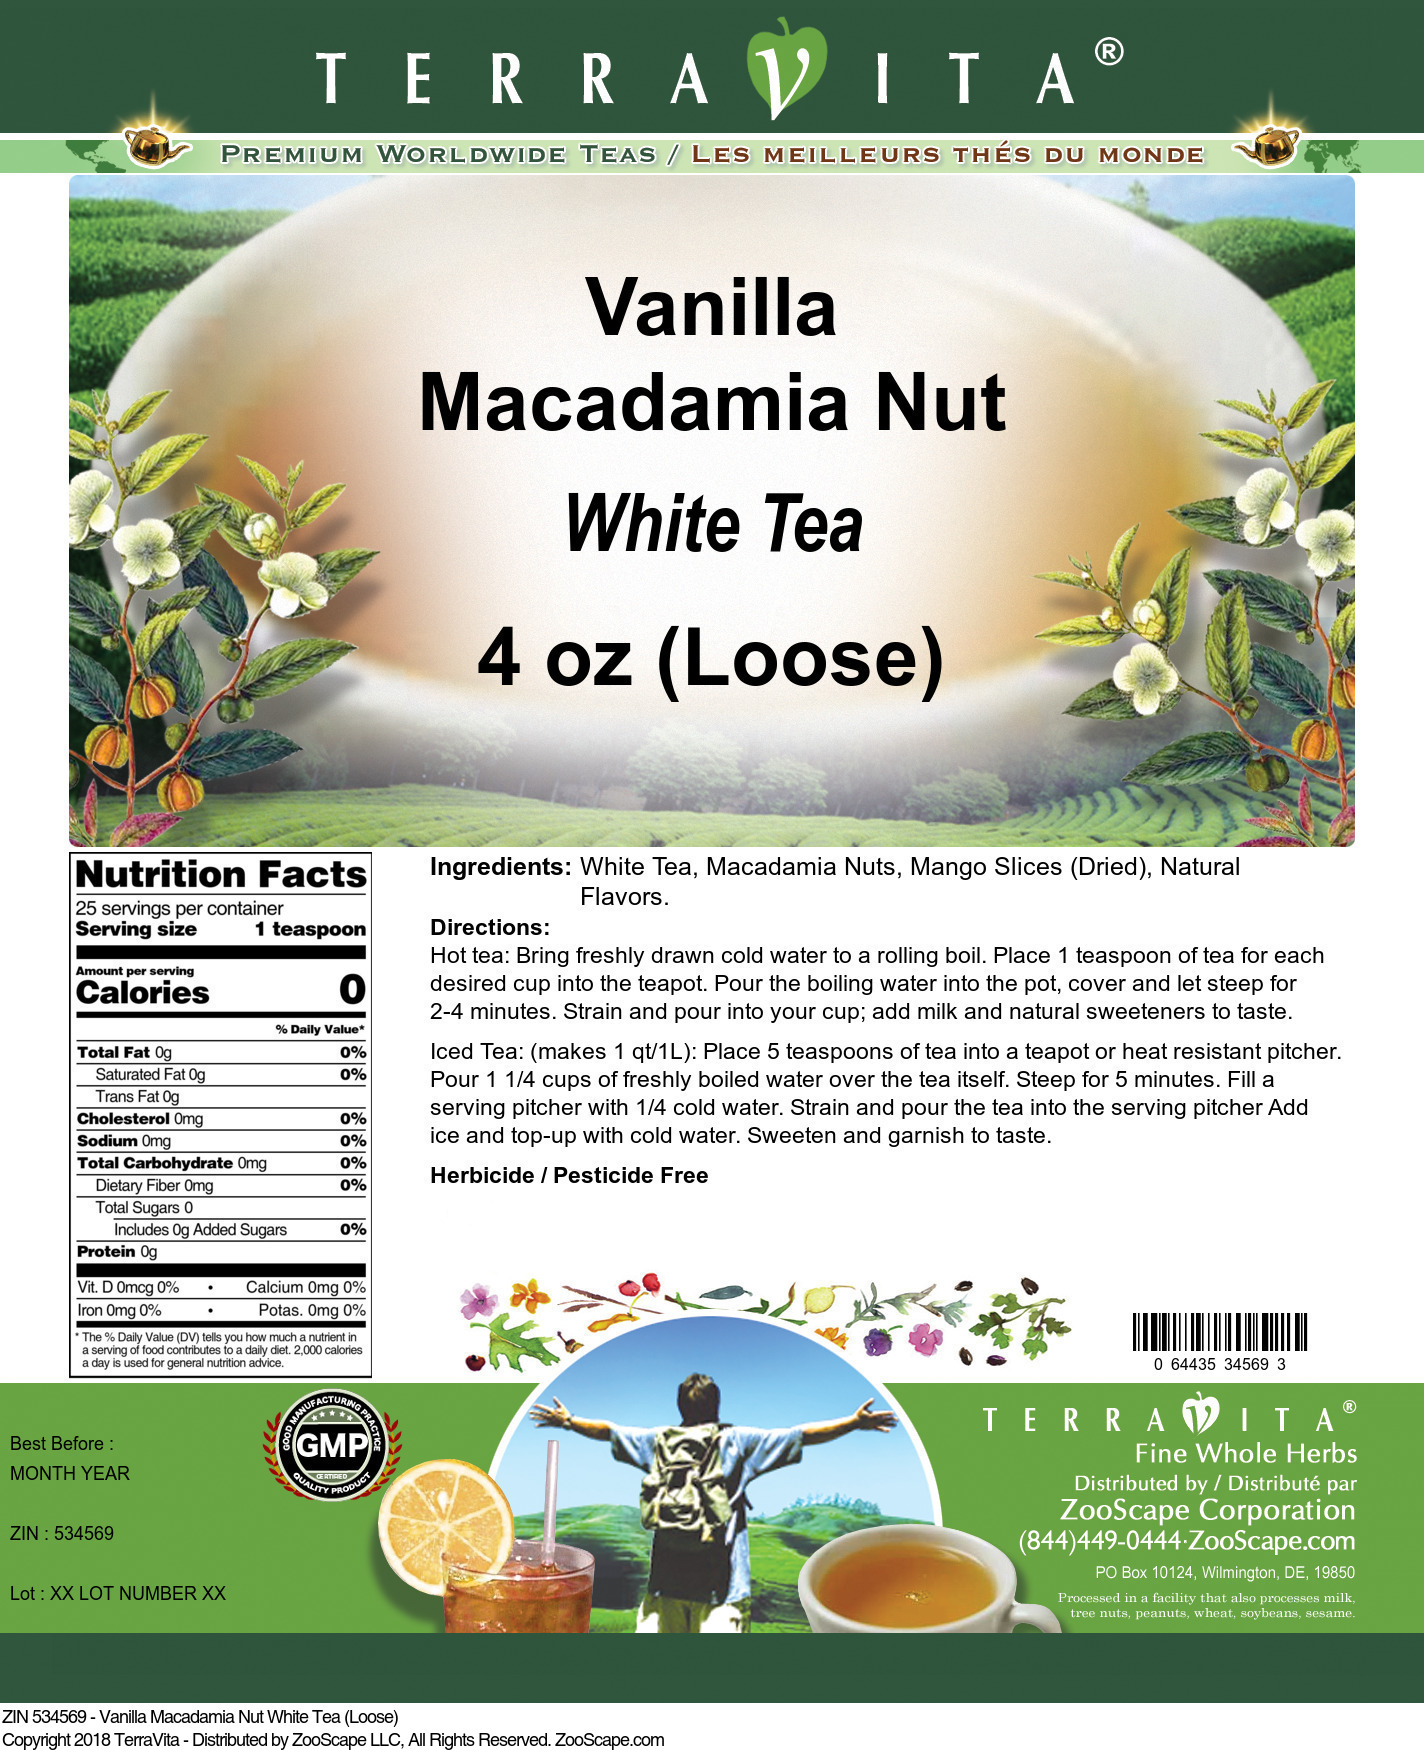 Vanilla Macadamia Nut White Tea (Loose) - Label